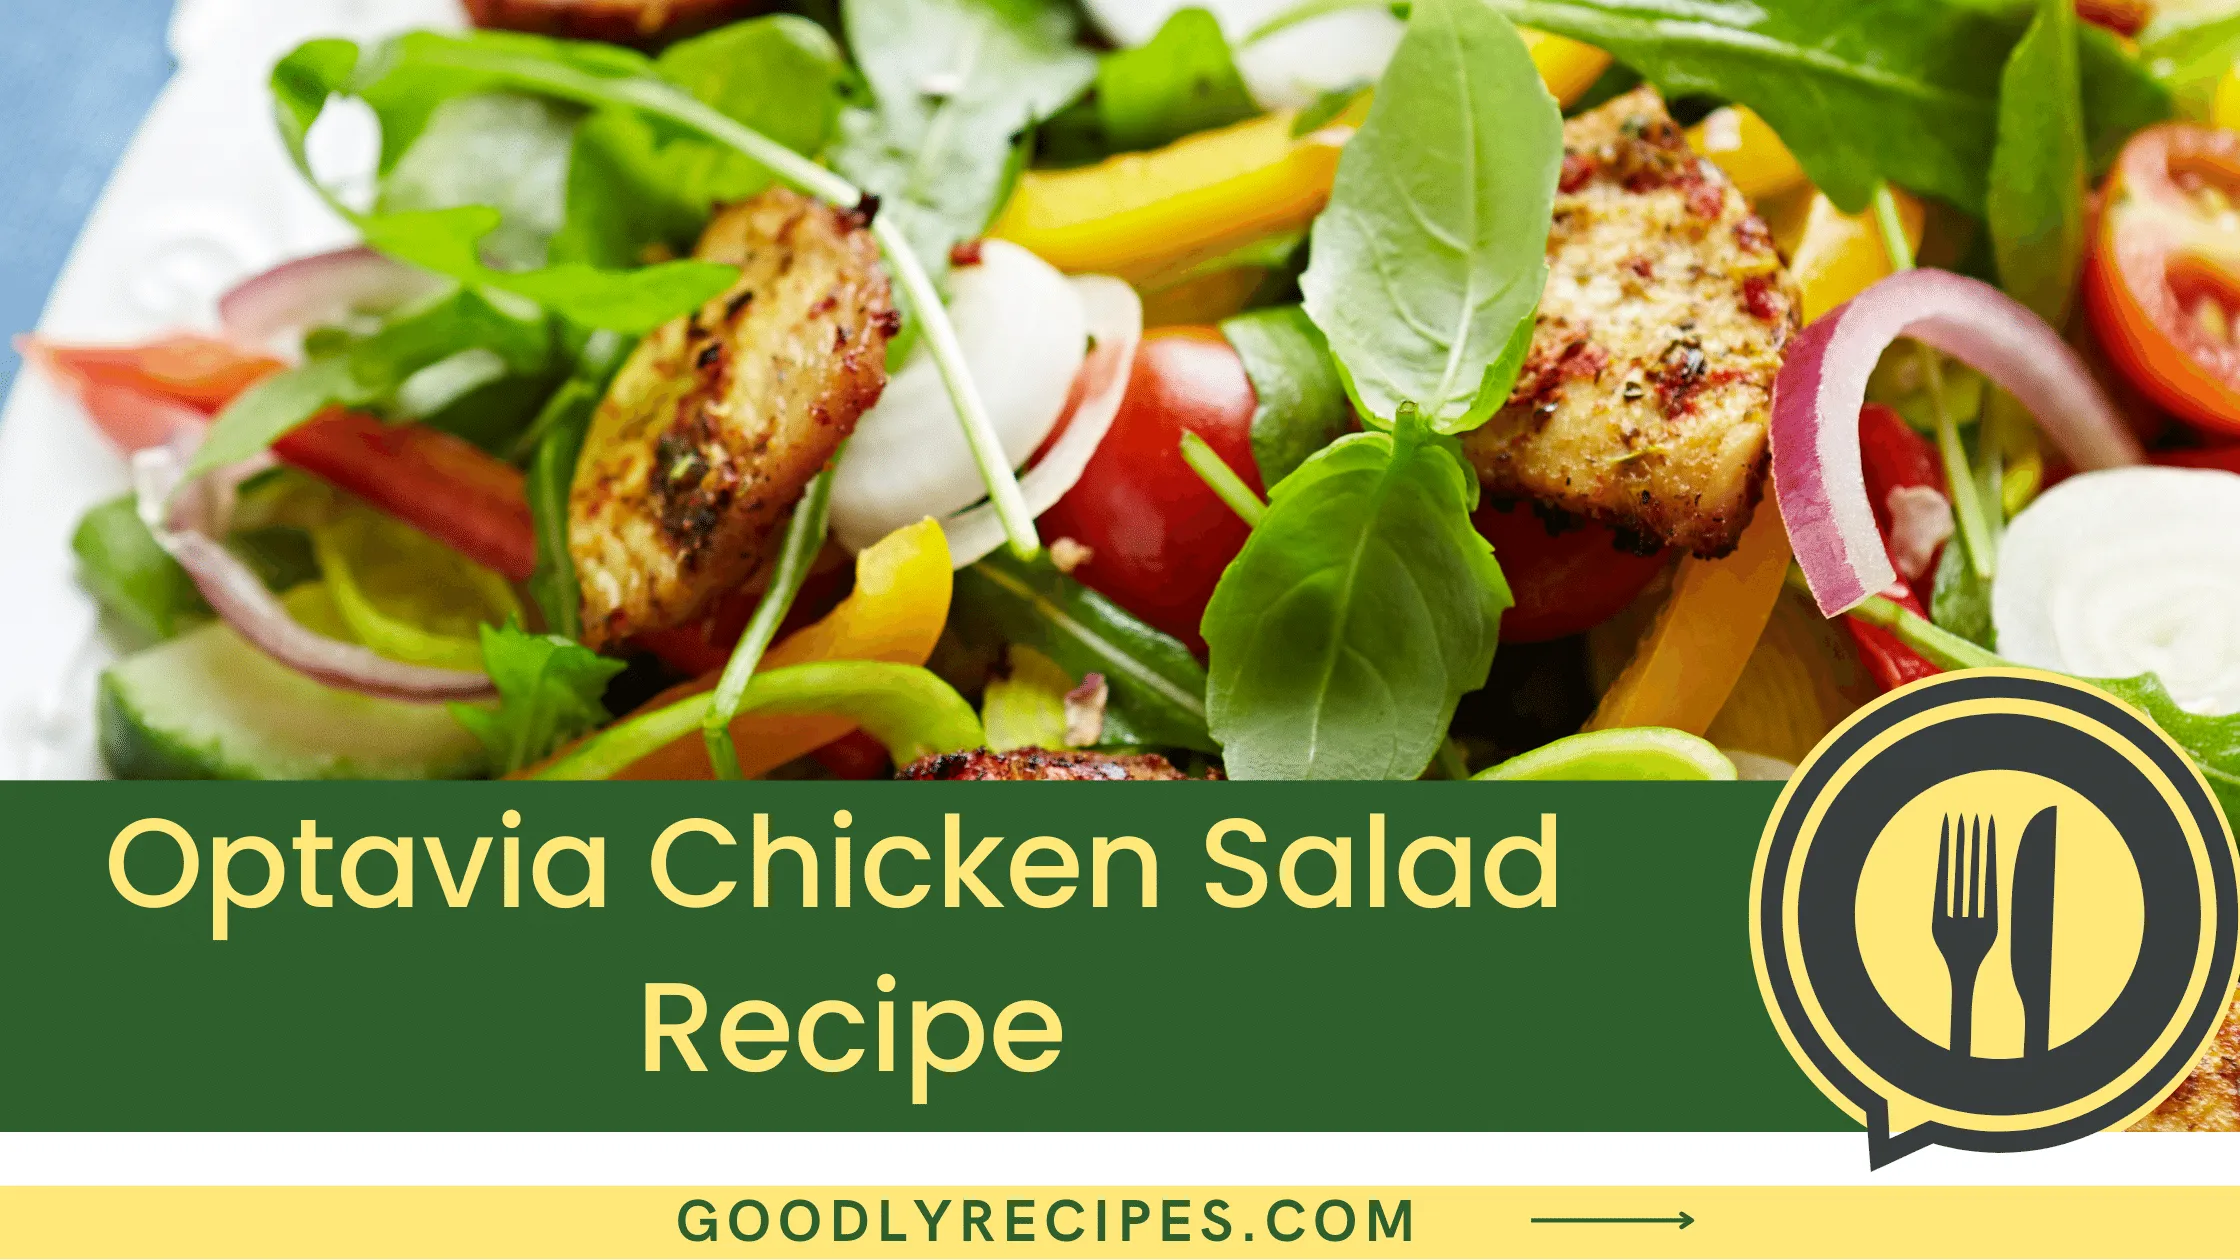 Optavia Chicken Salad Recipe - For Food Lovers